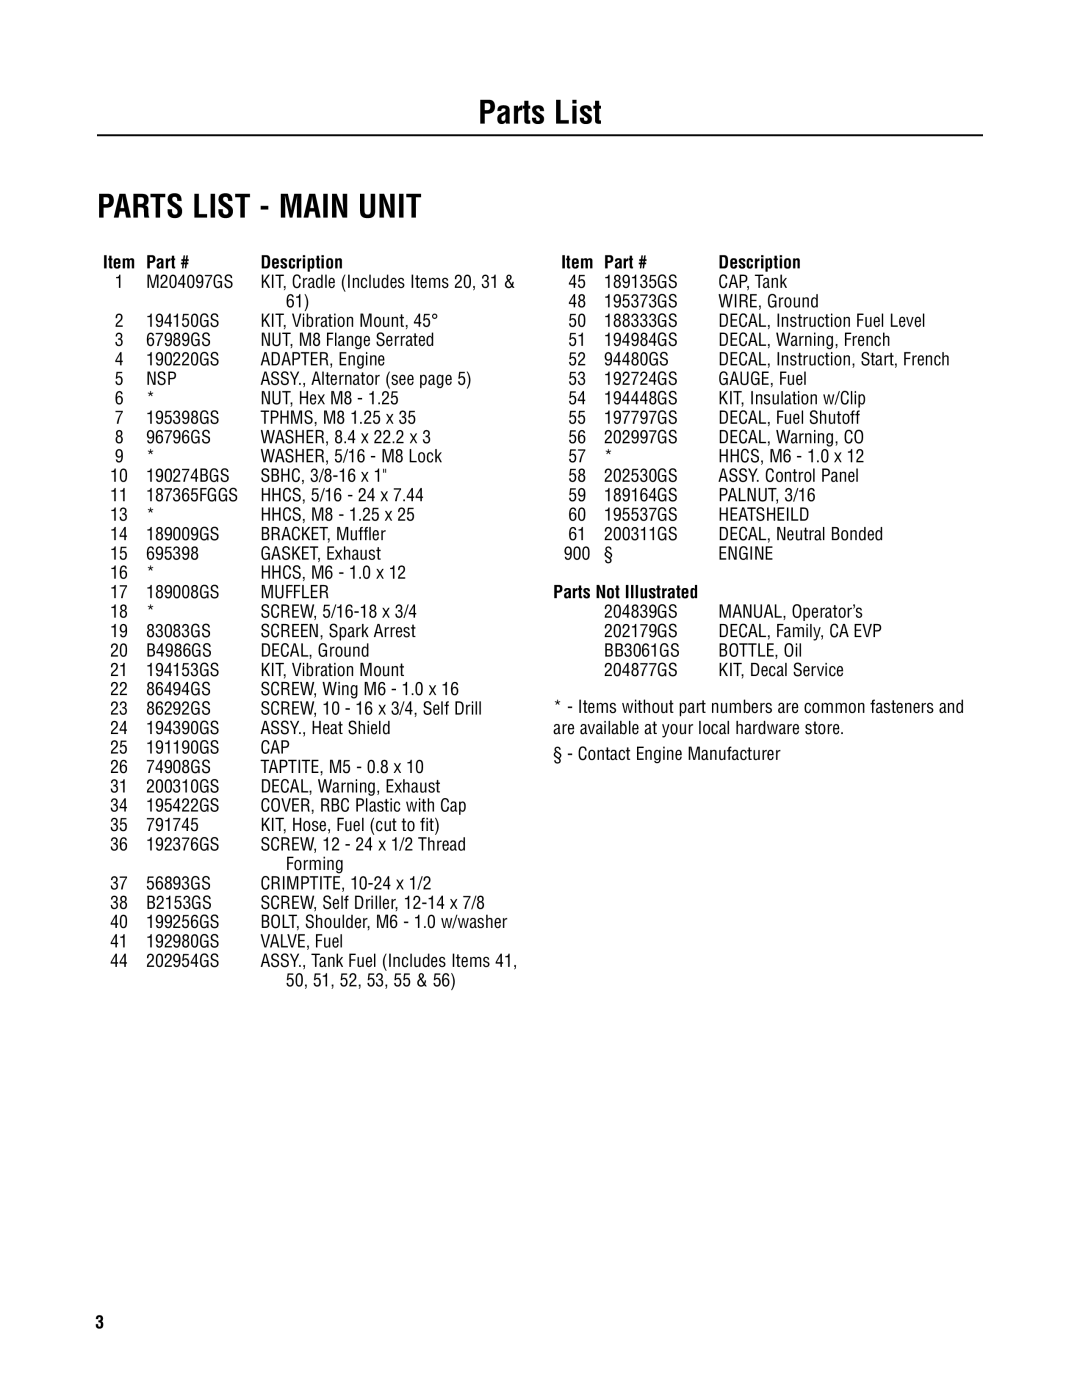 Husqvarna 1055 GN Parts List PARTS LIST - MAIN UNIT, Description, Parts Not Illustrated, DECAL, Instruction, Start, French 